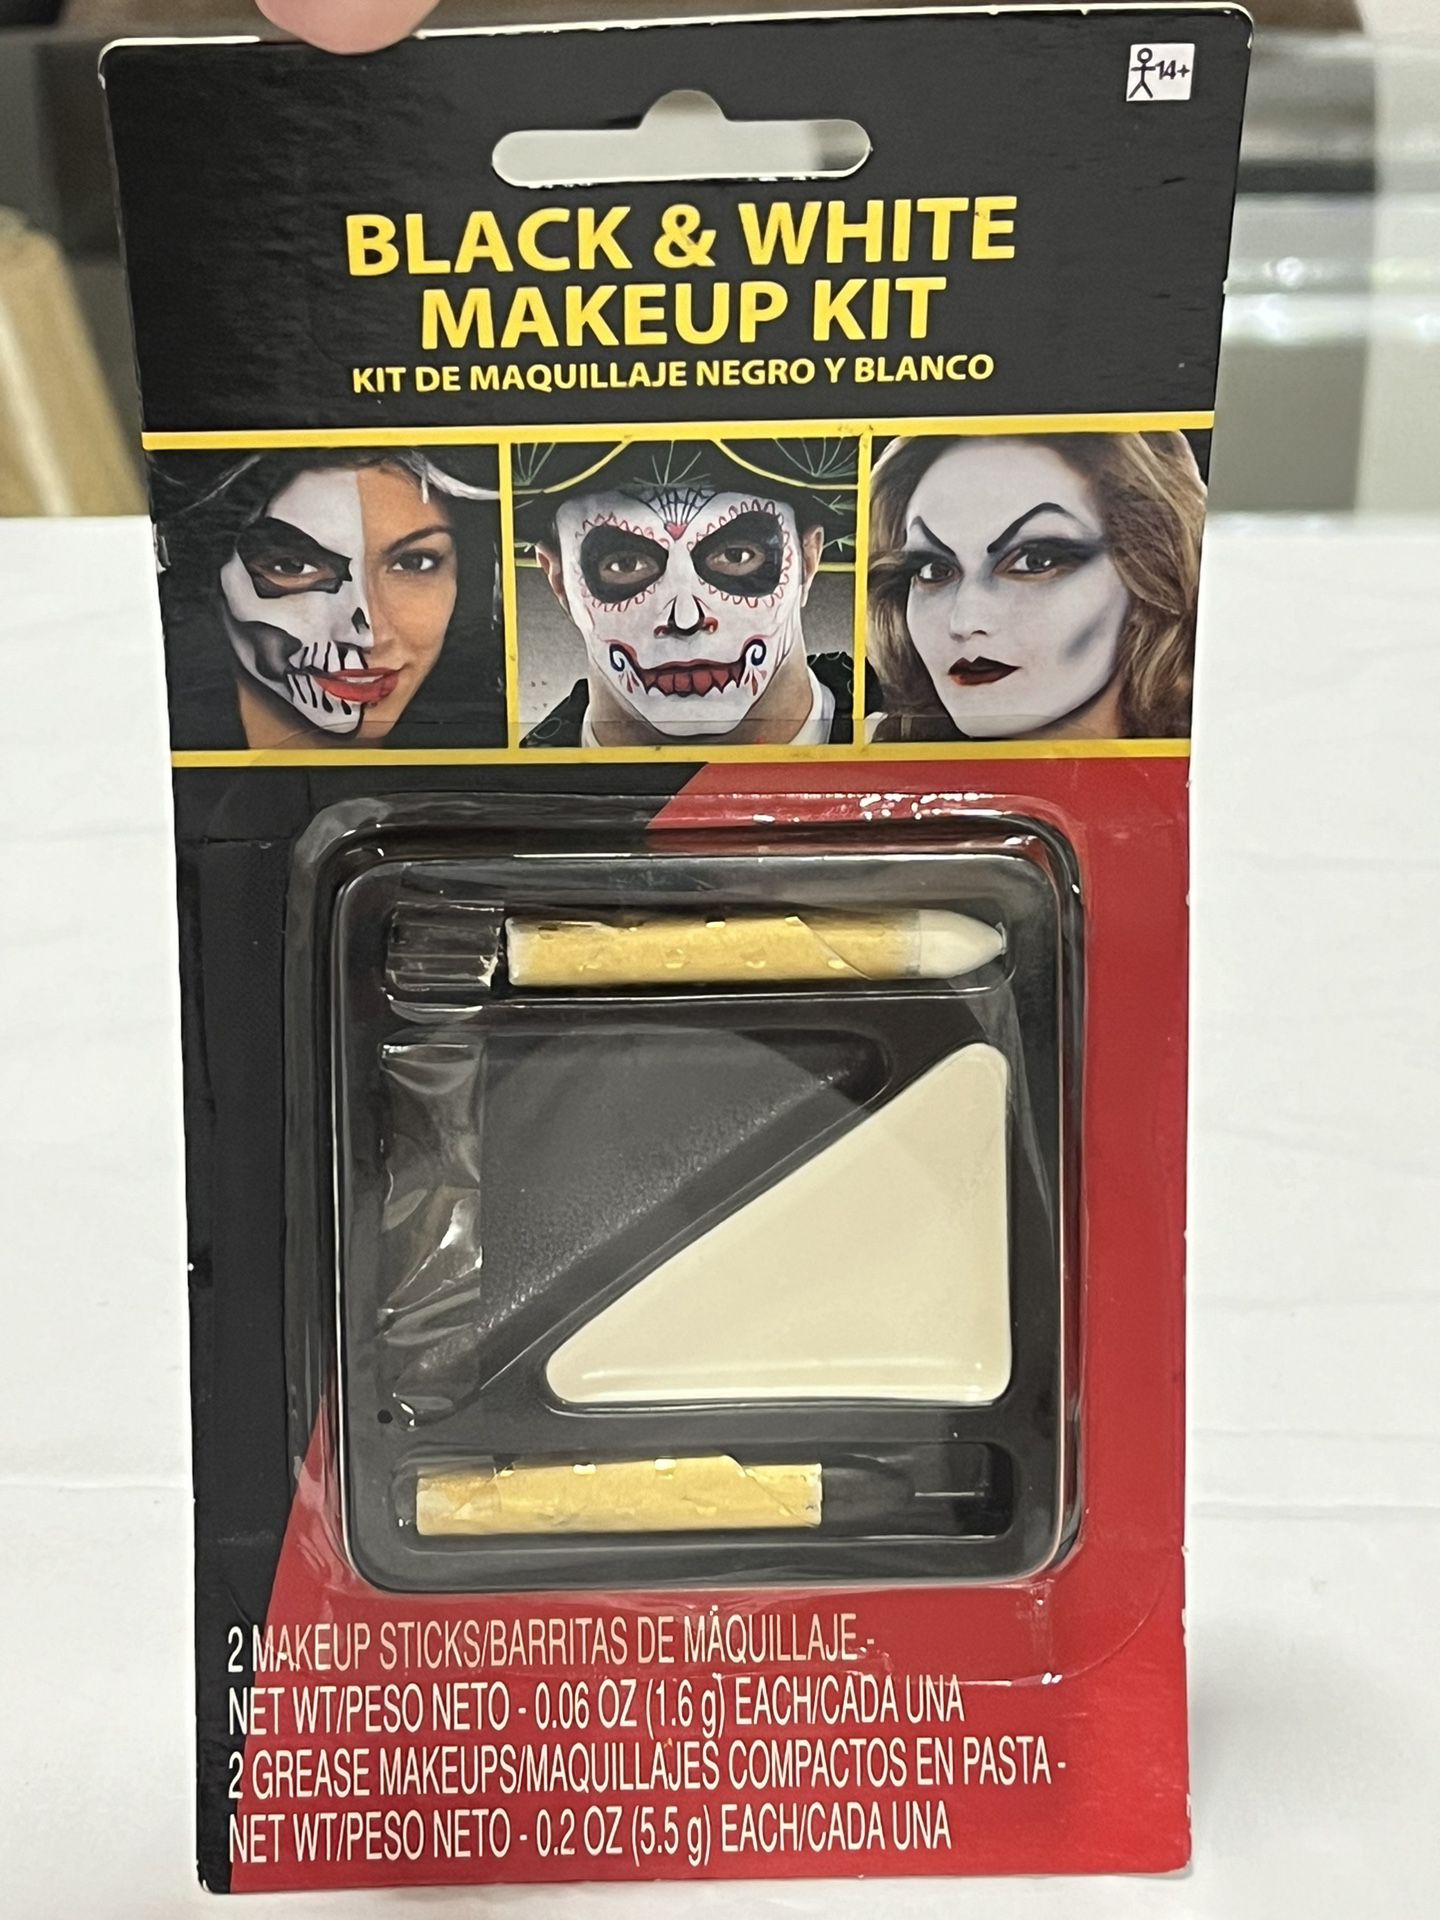 Black & White Makeup Kit. 2 Makeup Sticks Non-Toxic. Age 14+